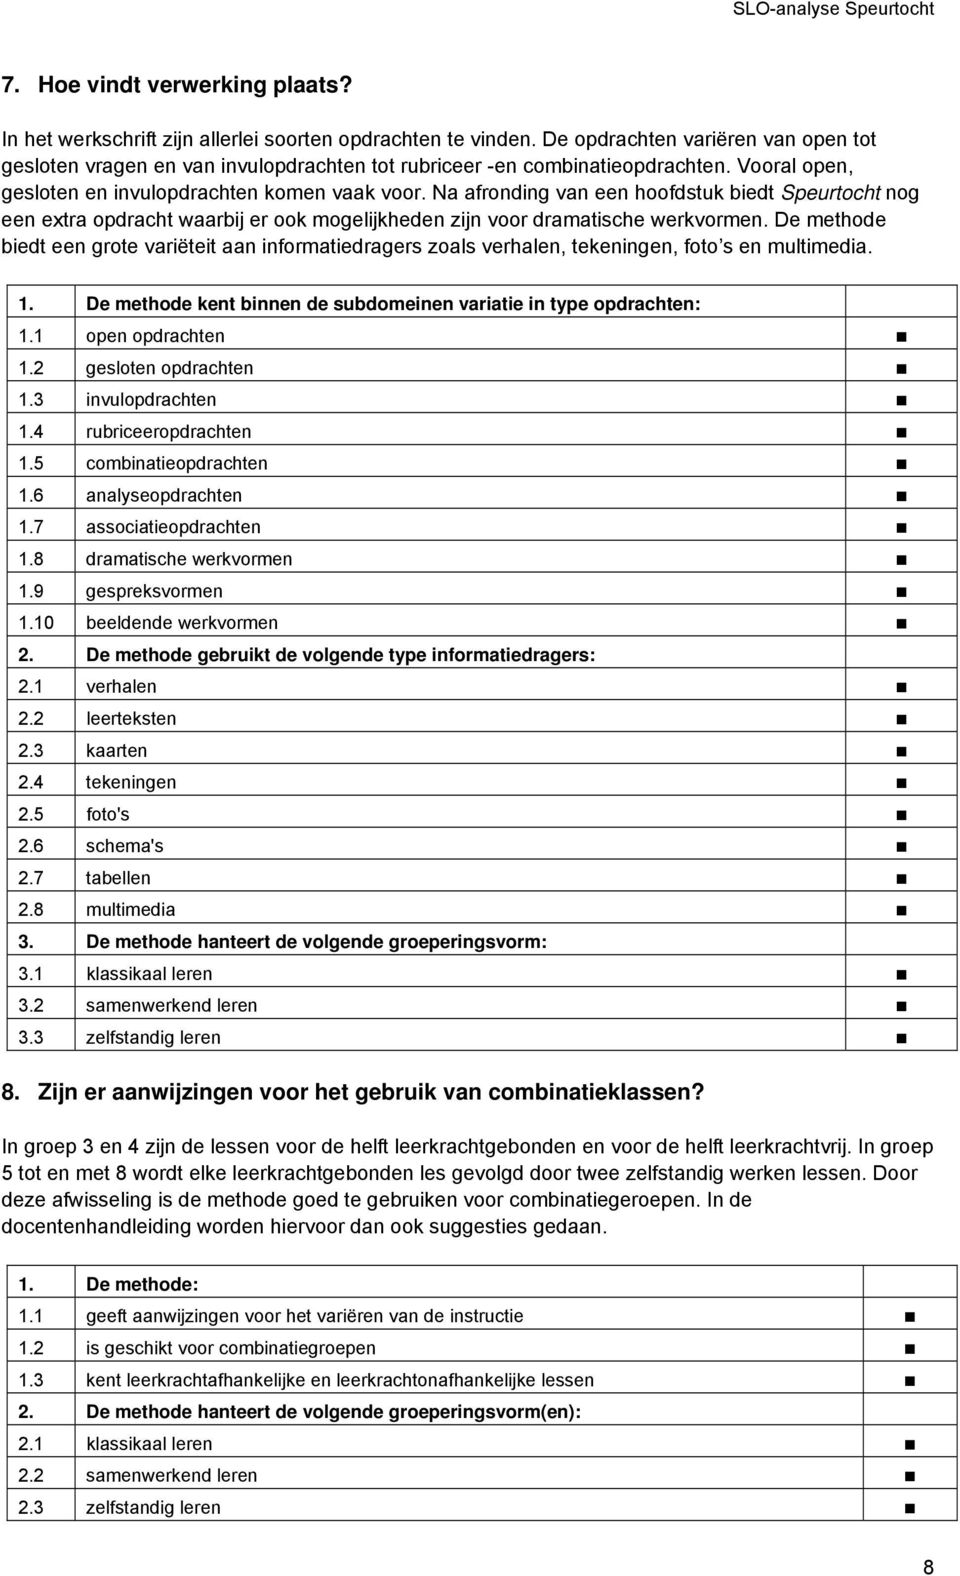 Uitgelezene SLO-analyse Speurtocht - ThiemeMeulenhoff - PDF Free Download NP-88